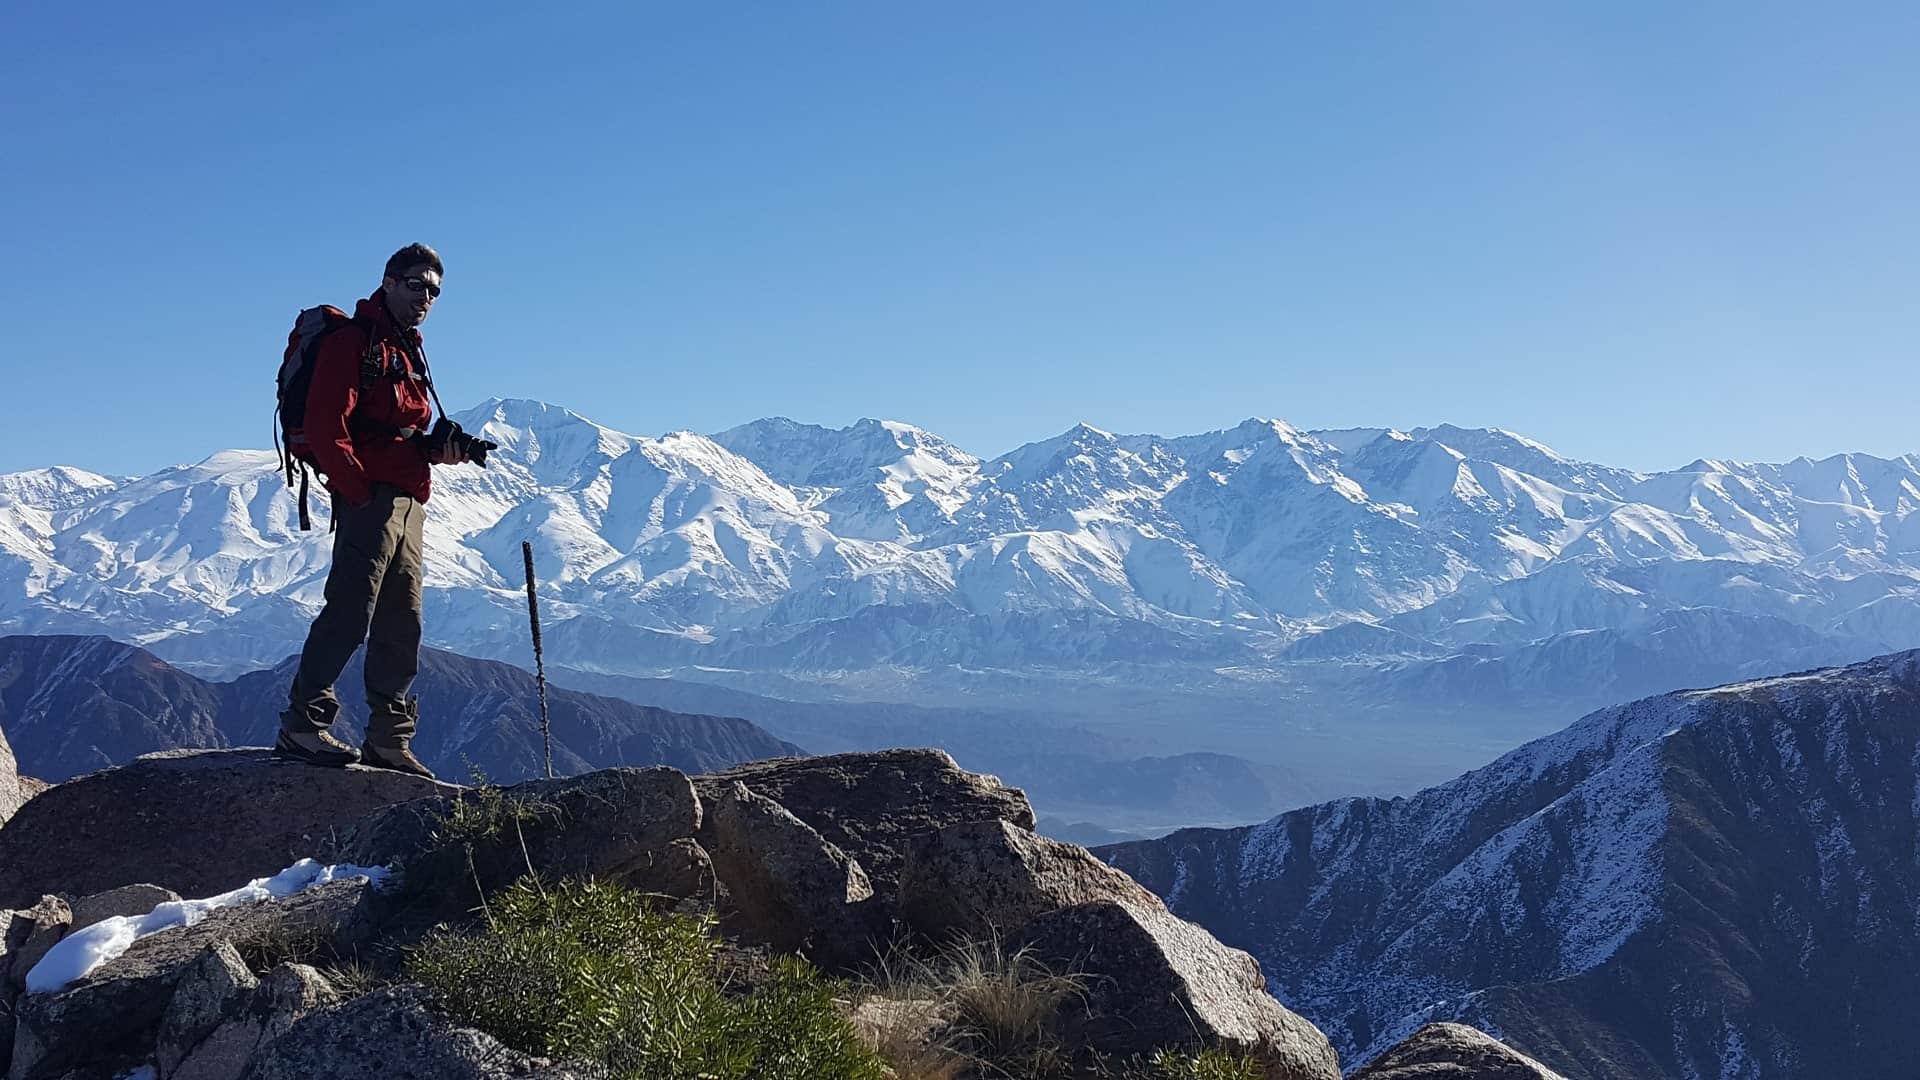 Imagen de un escalador sobre la cumbre de un cerro disfrutando la vista